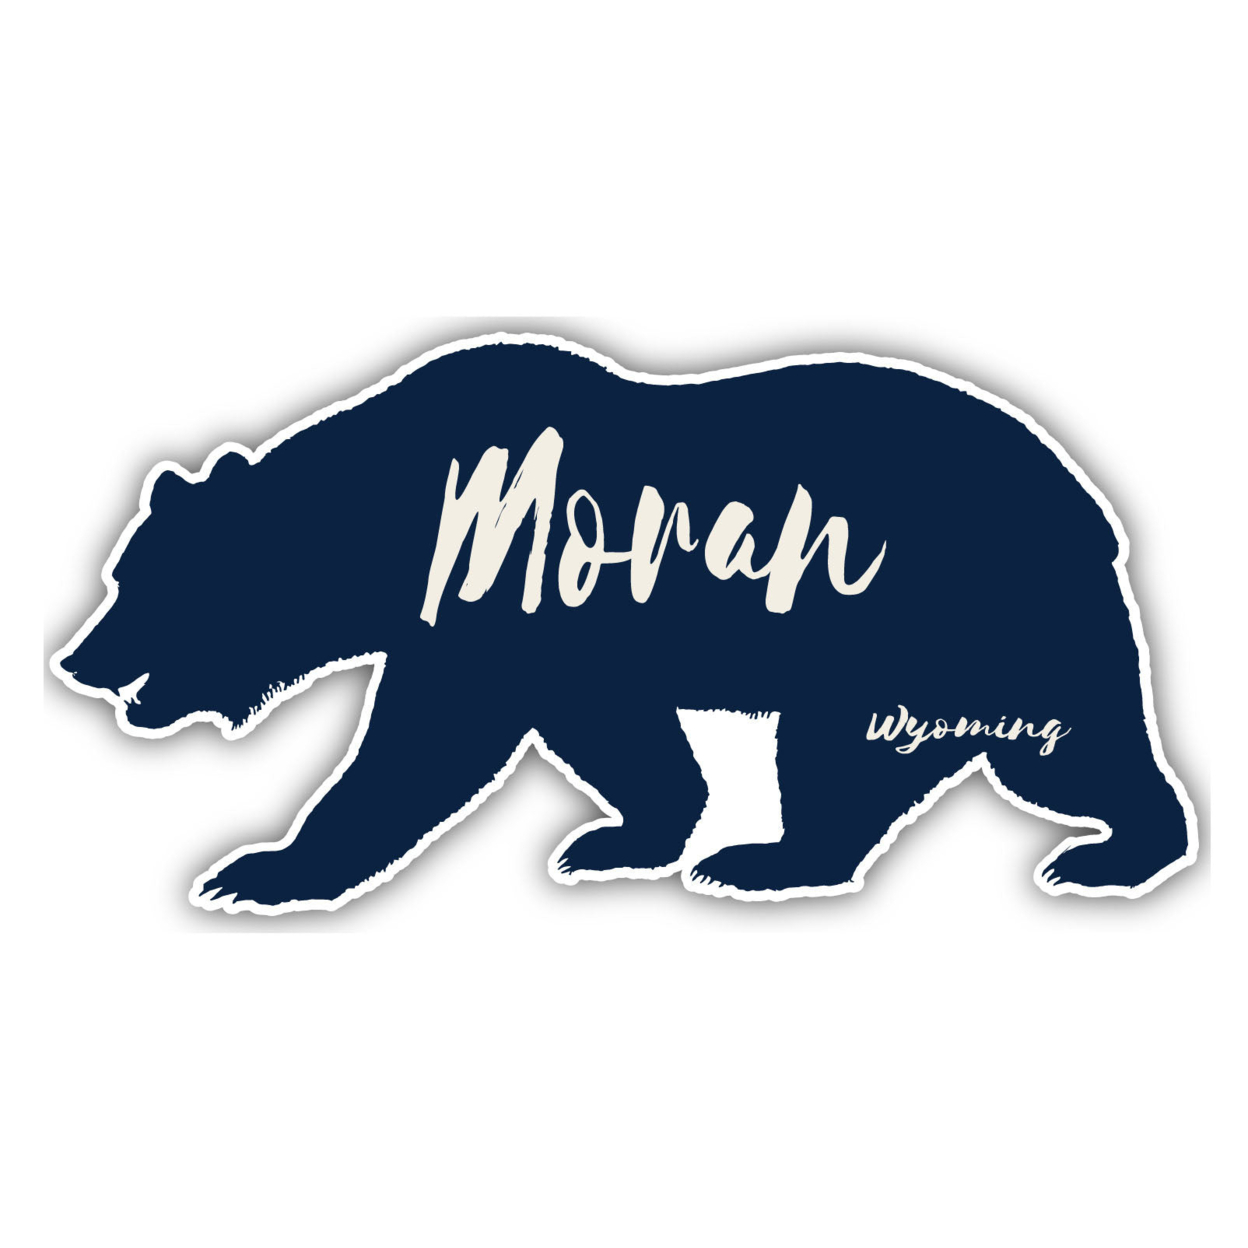 Moran Wyoming Souvenir Decorative Stickers (Choose Theme And Size) - Single Unit, 4-Inch, Bear